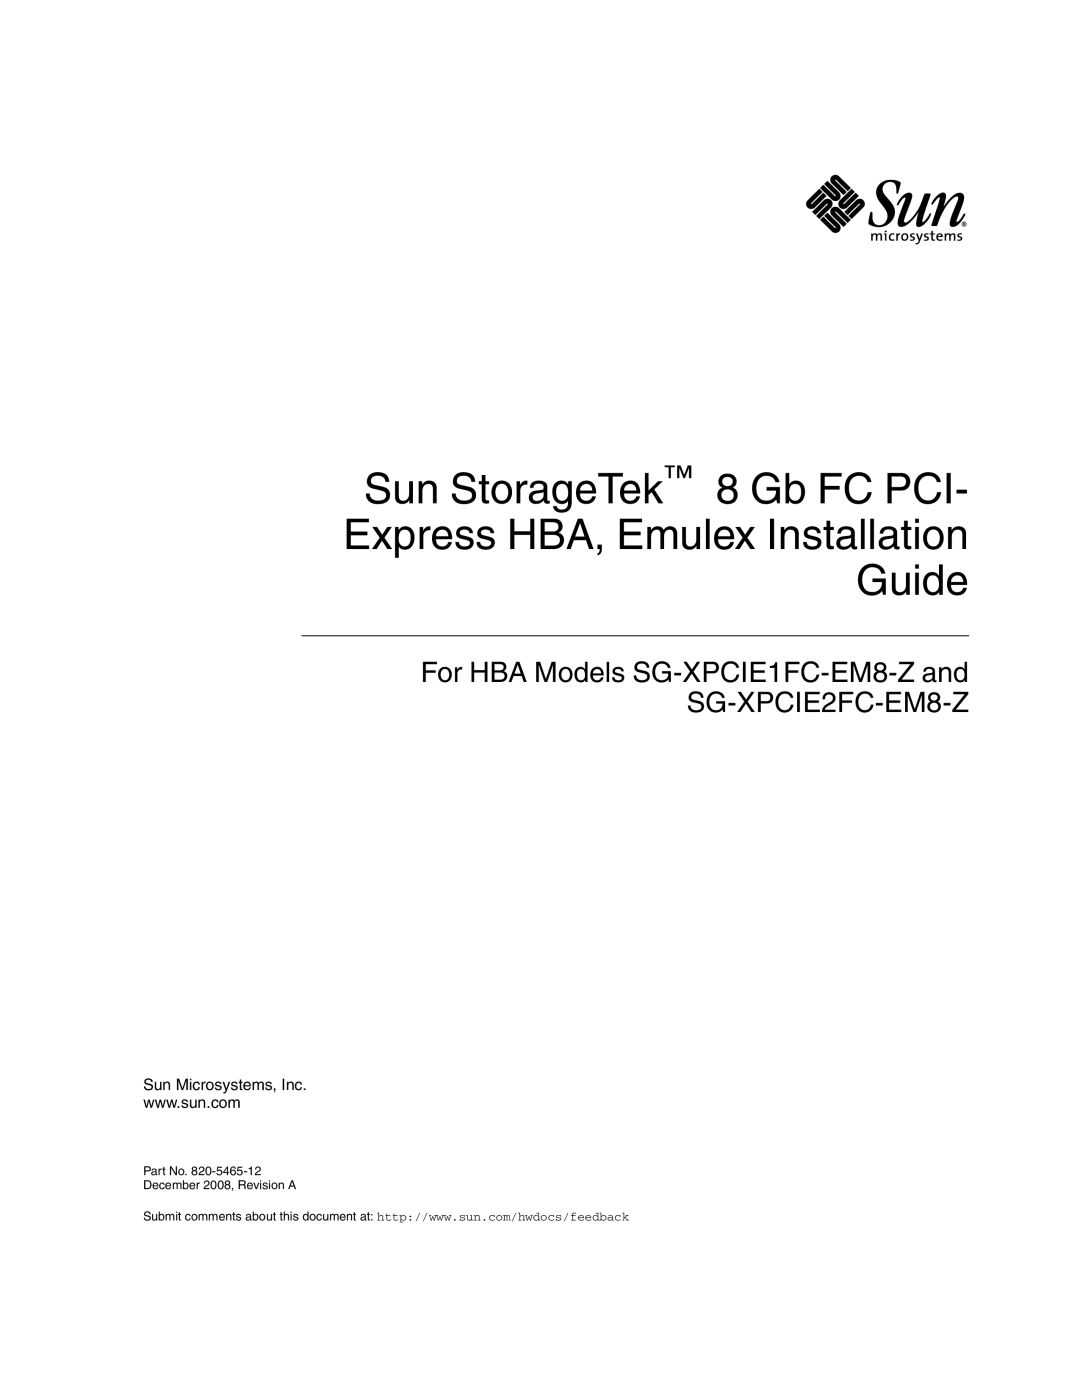 Sun Microsystems SG-XPCIE1FC-EM8-Z manual Sun StorageTek 8 Gb FC PCI Express HBA, Emulex Installation Guide 